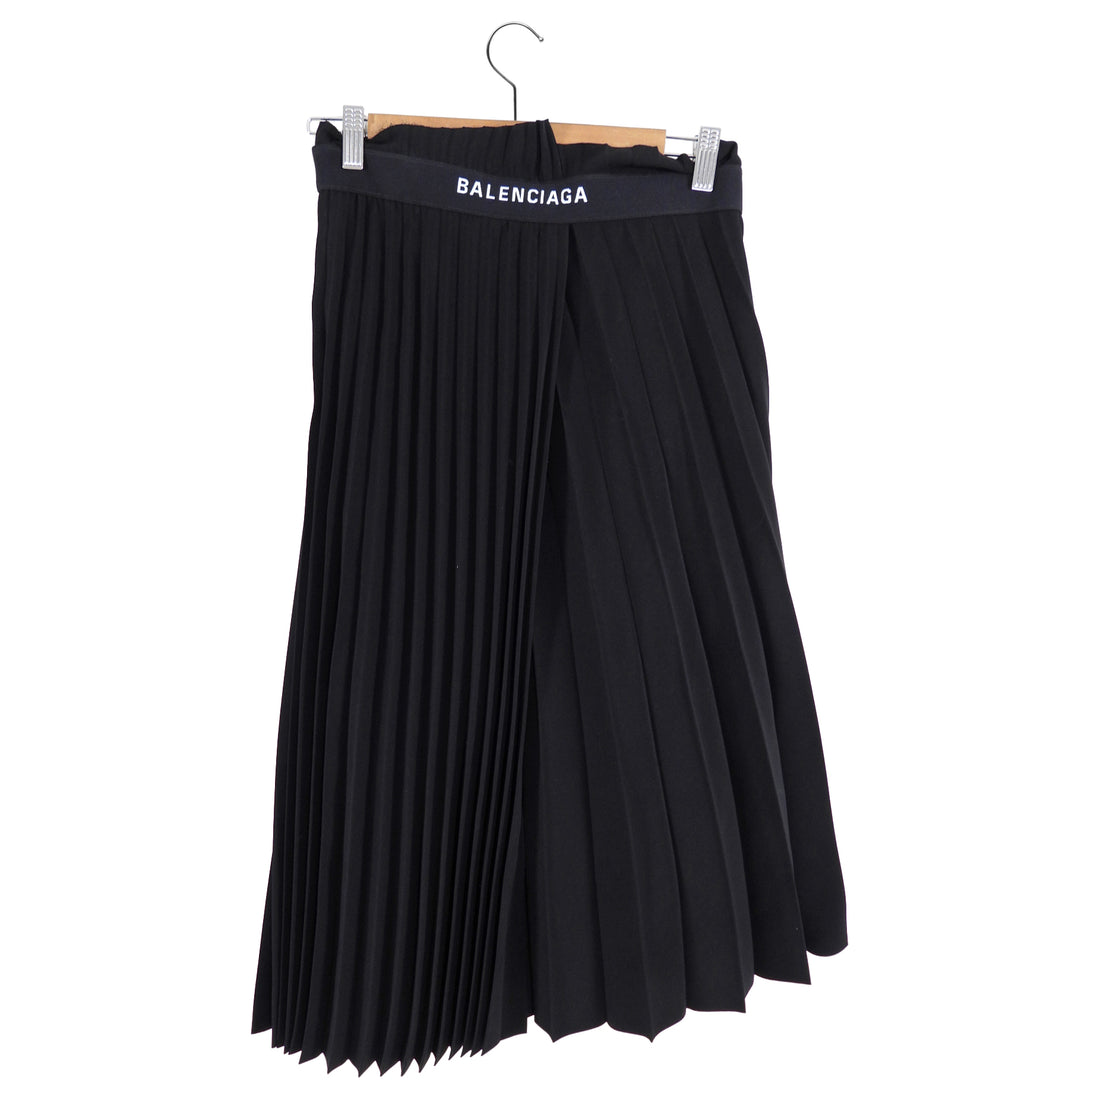 Balenciaga 2018 Black Flat Pleated midi Skirt with Logo Waistband - FR38 / S